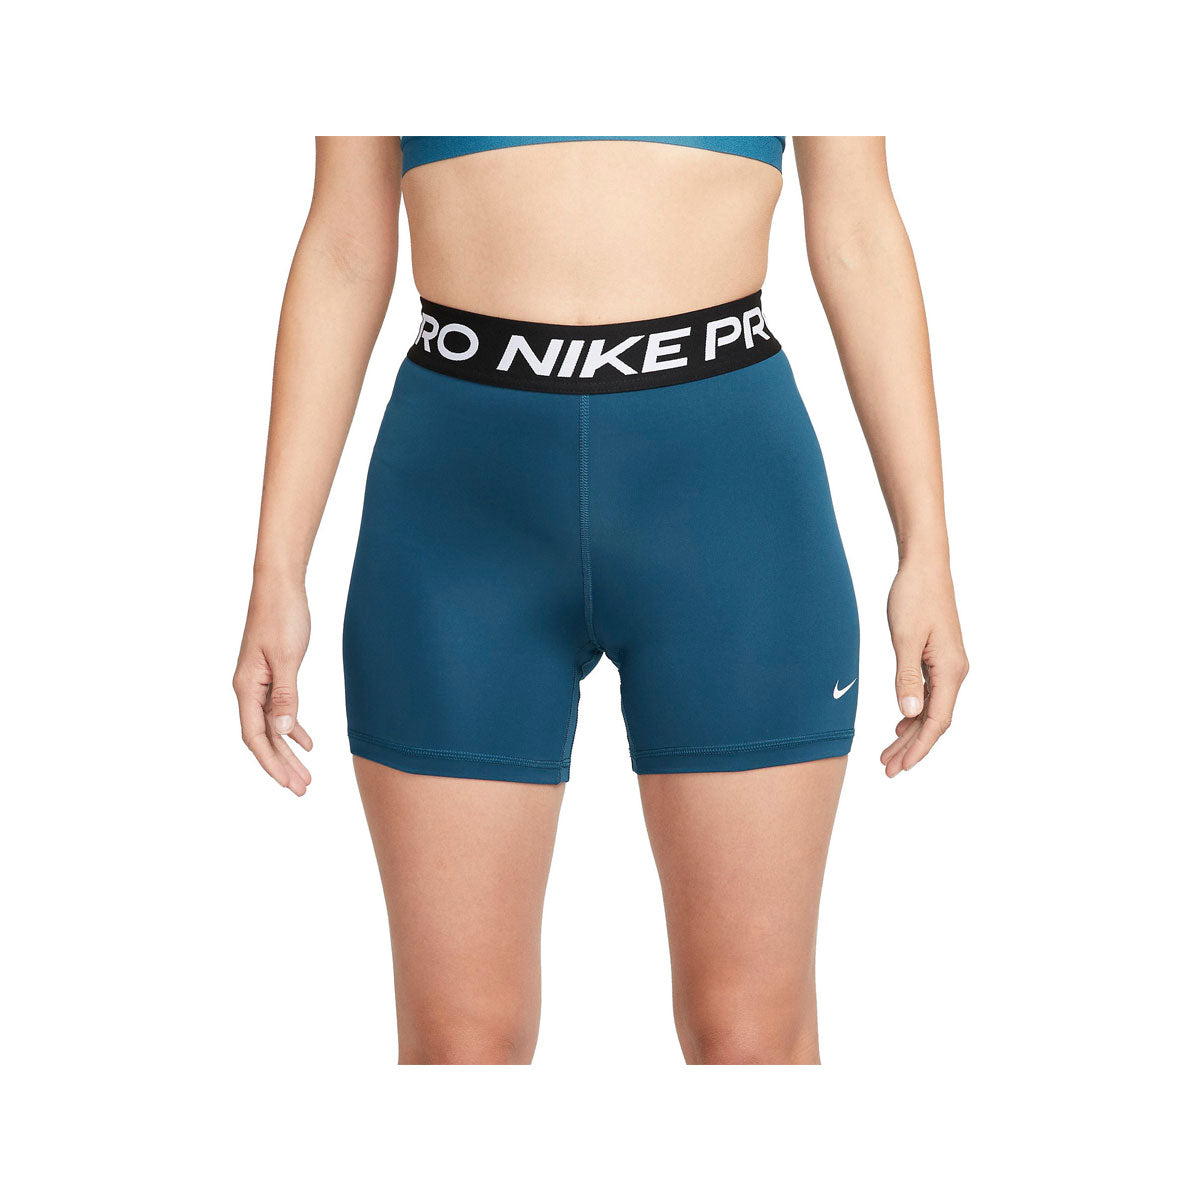 Nike Pro Women's 365 5' Inch Short Tight